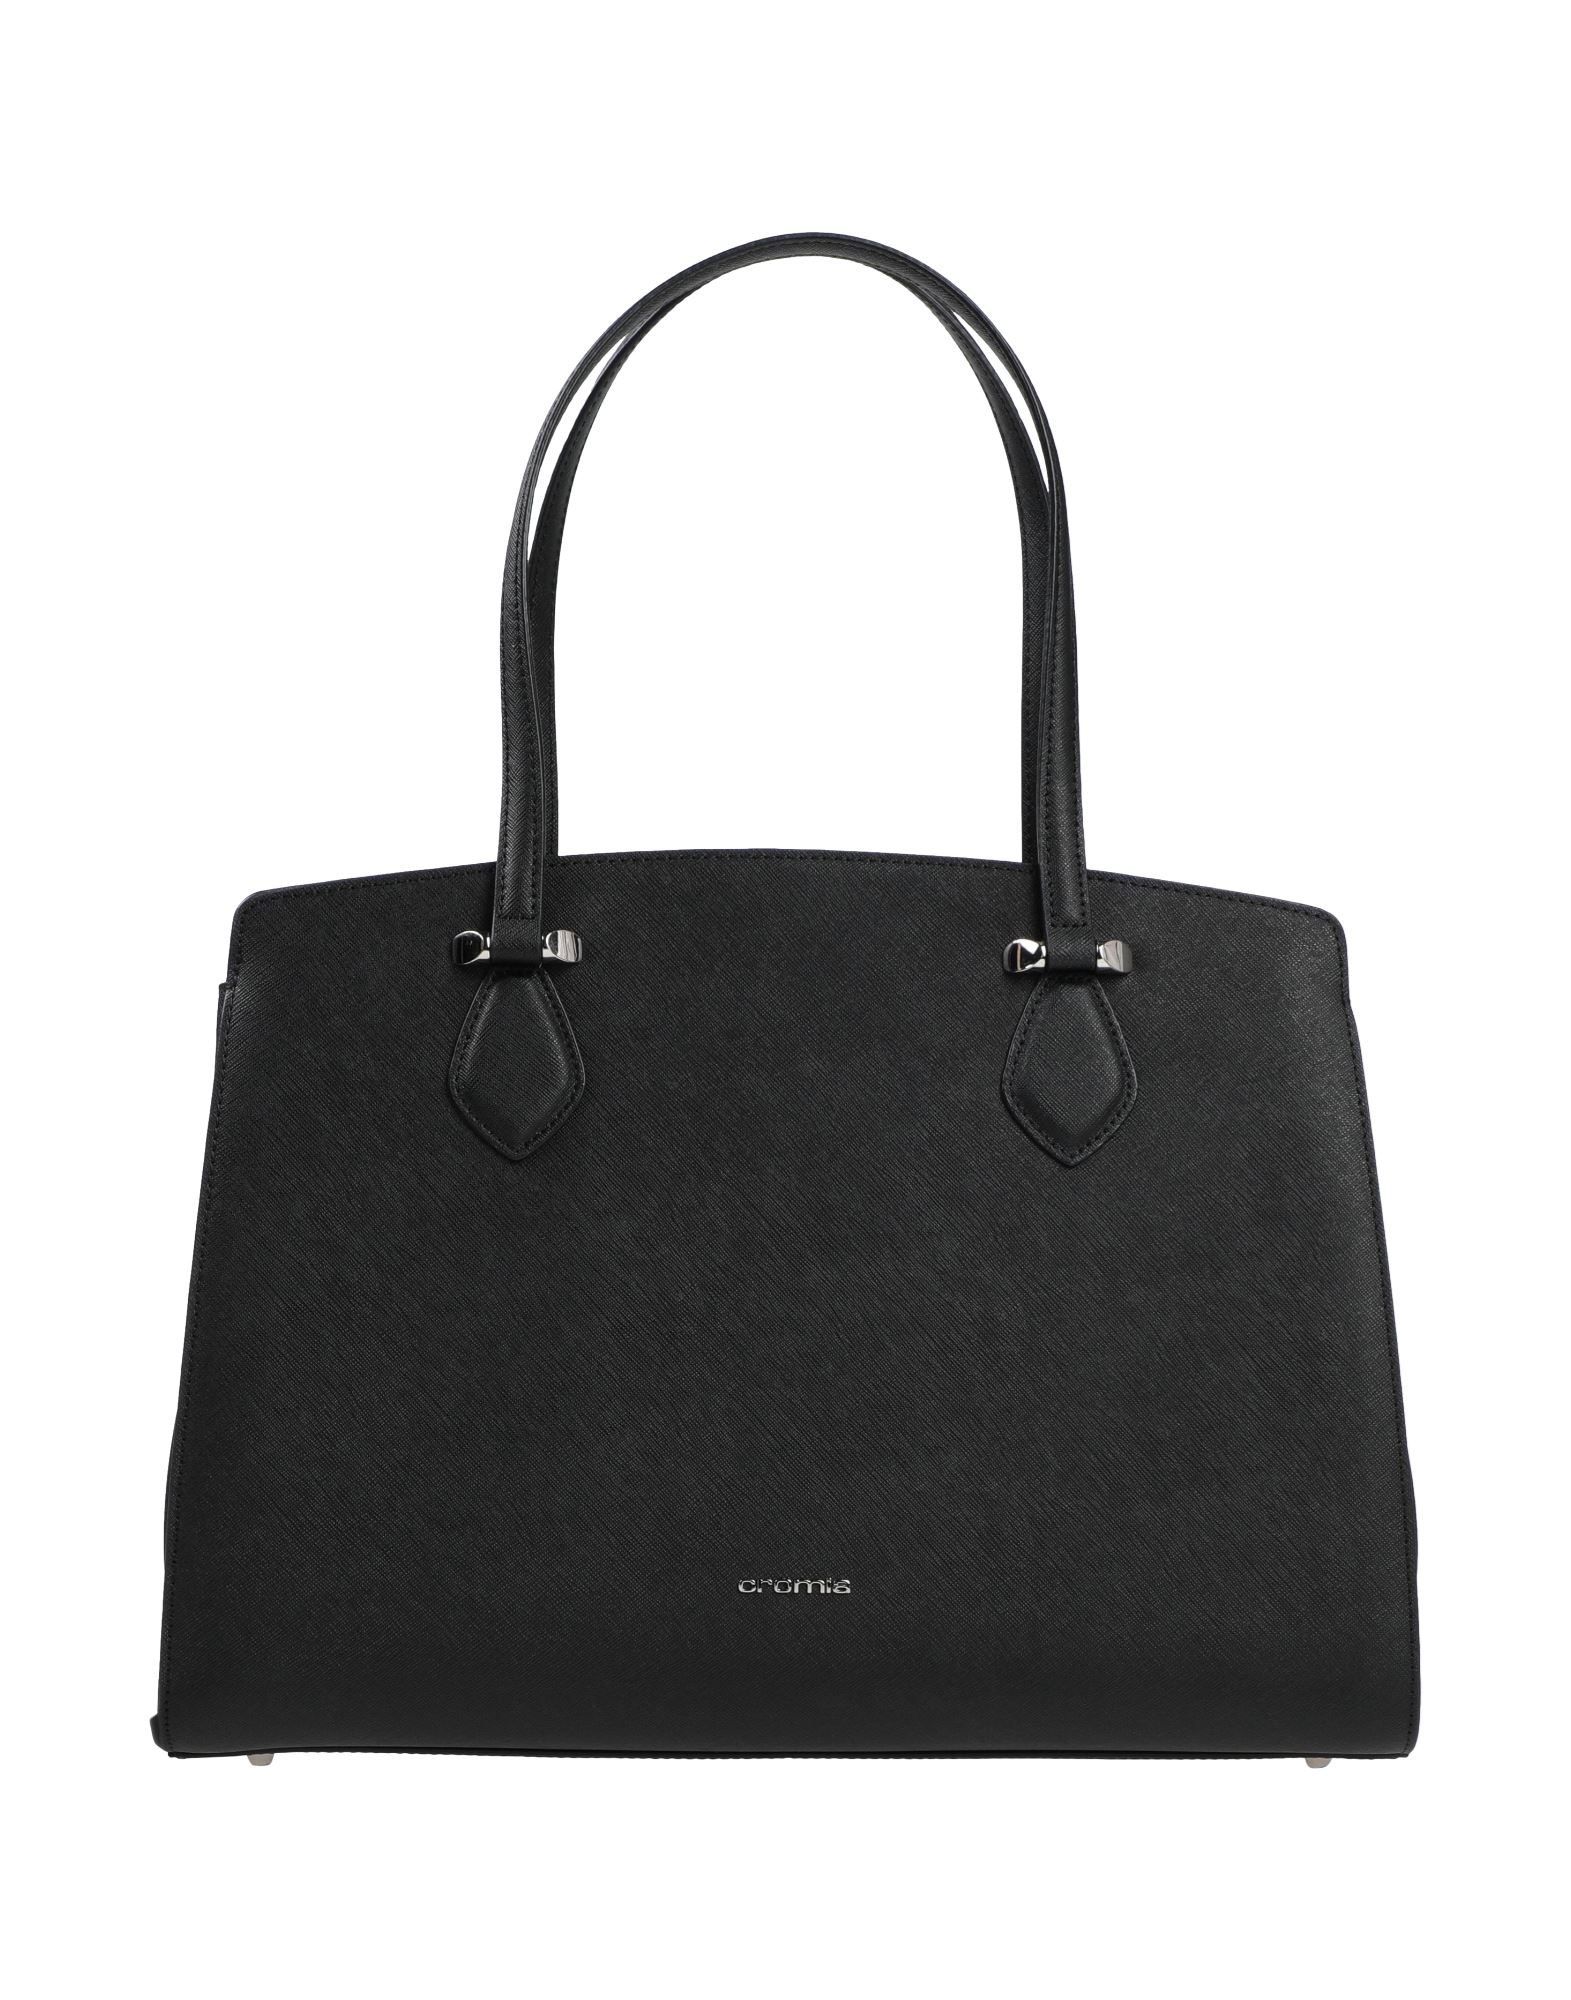 CROMIA Handbags - Item 45553036